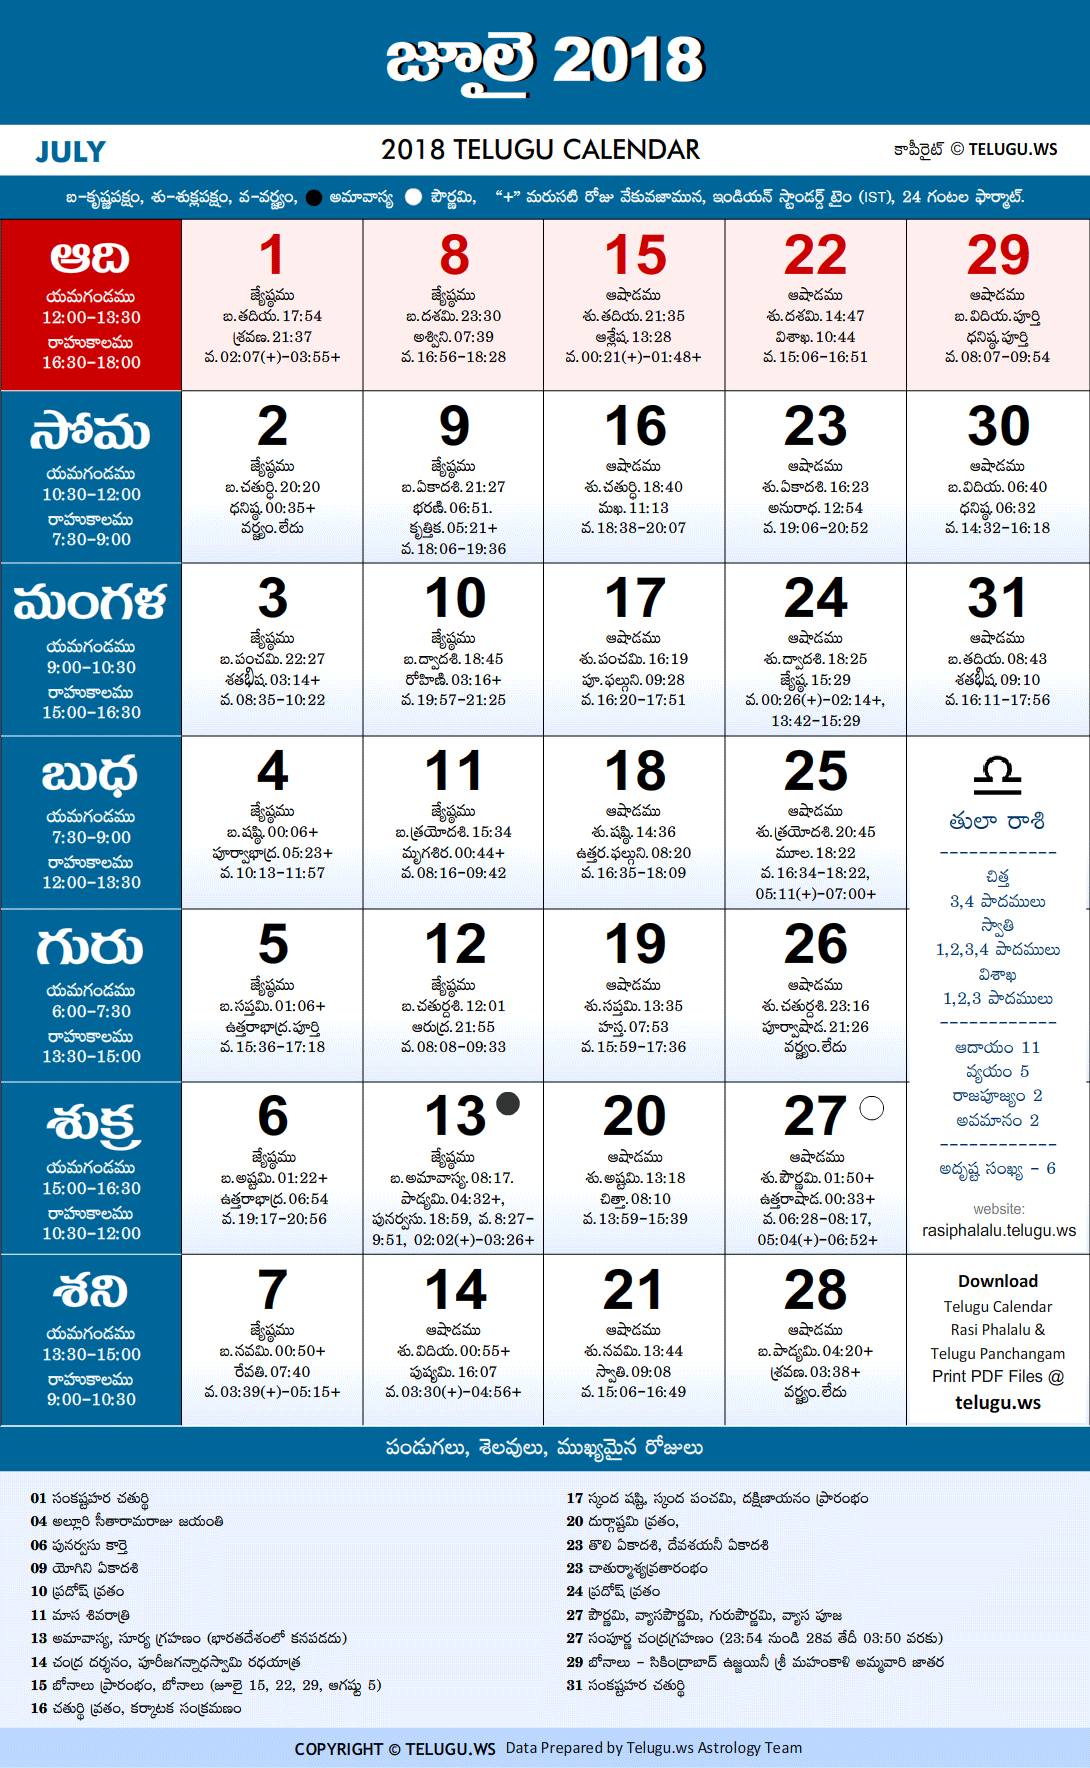 july-2018-holiday-calendar-for-australia-holiday-calendar-2018